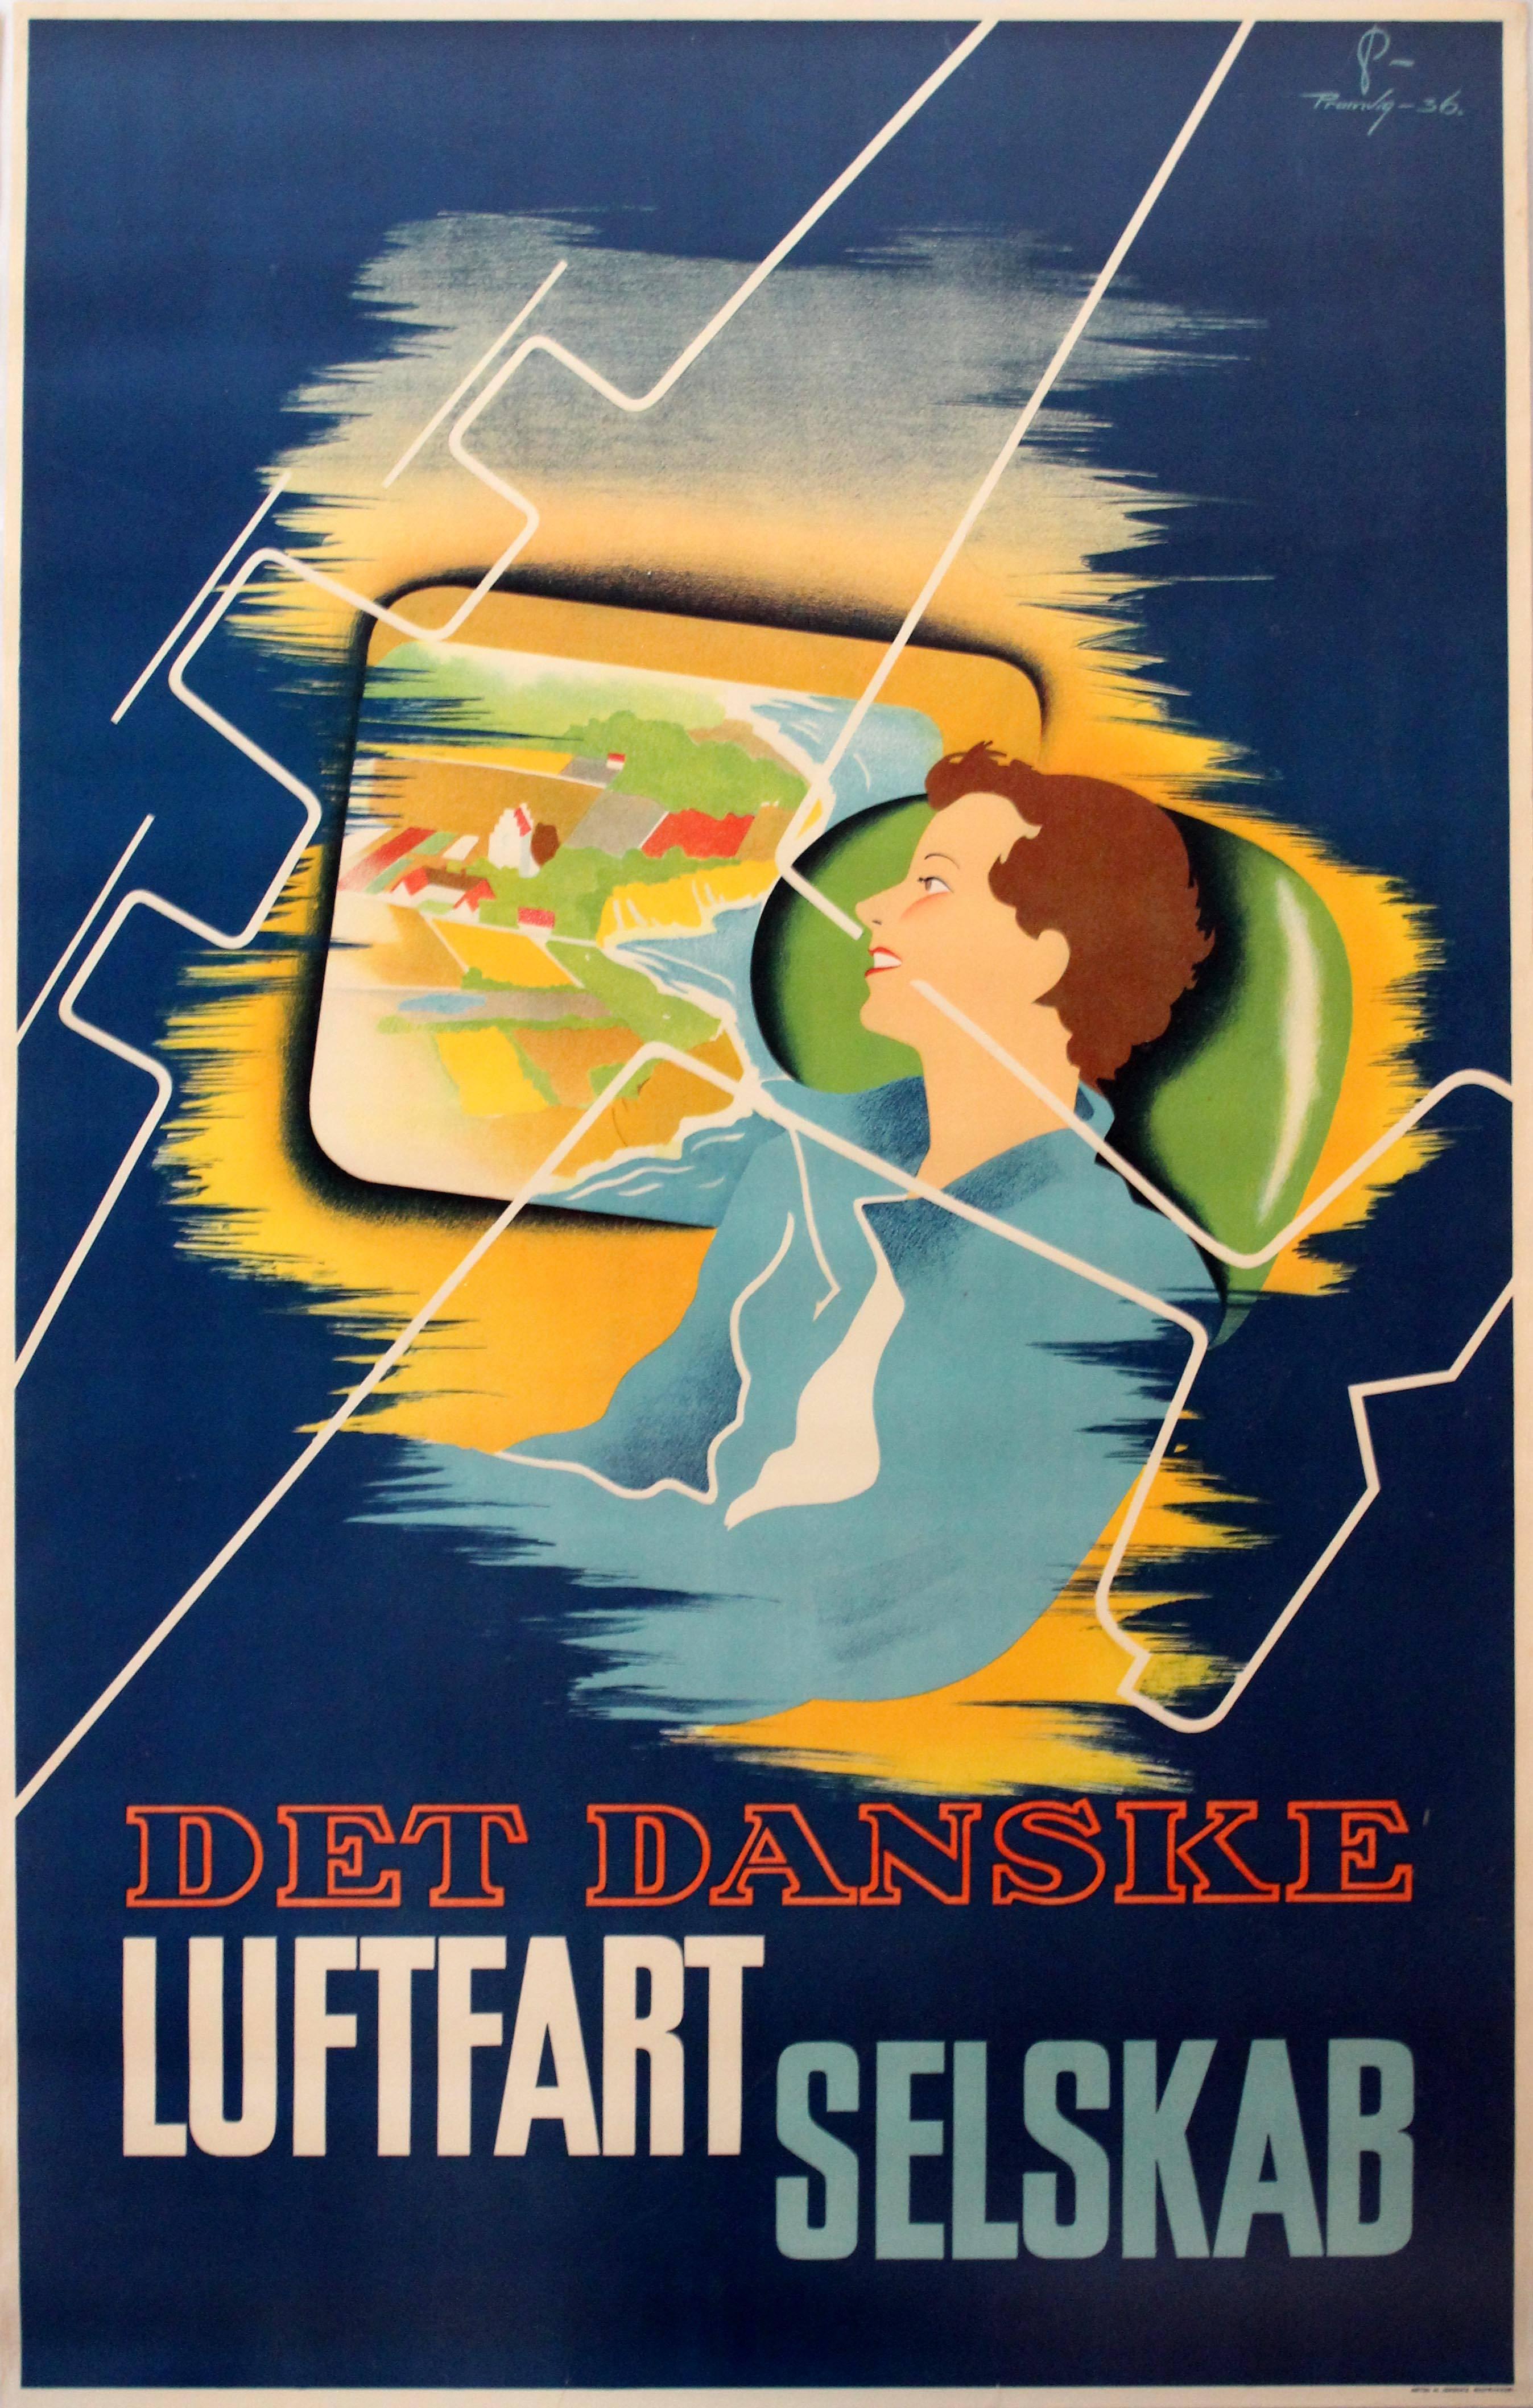 Pramvig Print - Original 1936 Danish Airlines Advertising Poster - Det Danske Luftfartselskab